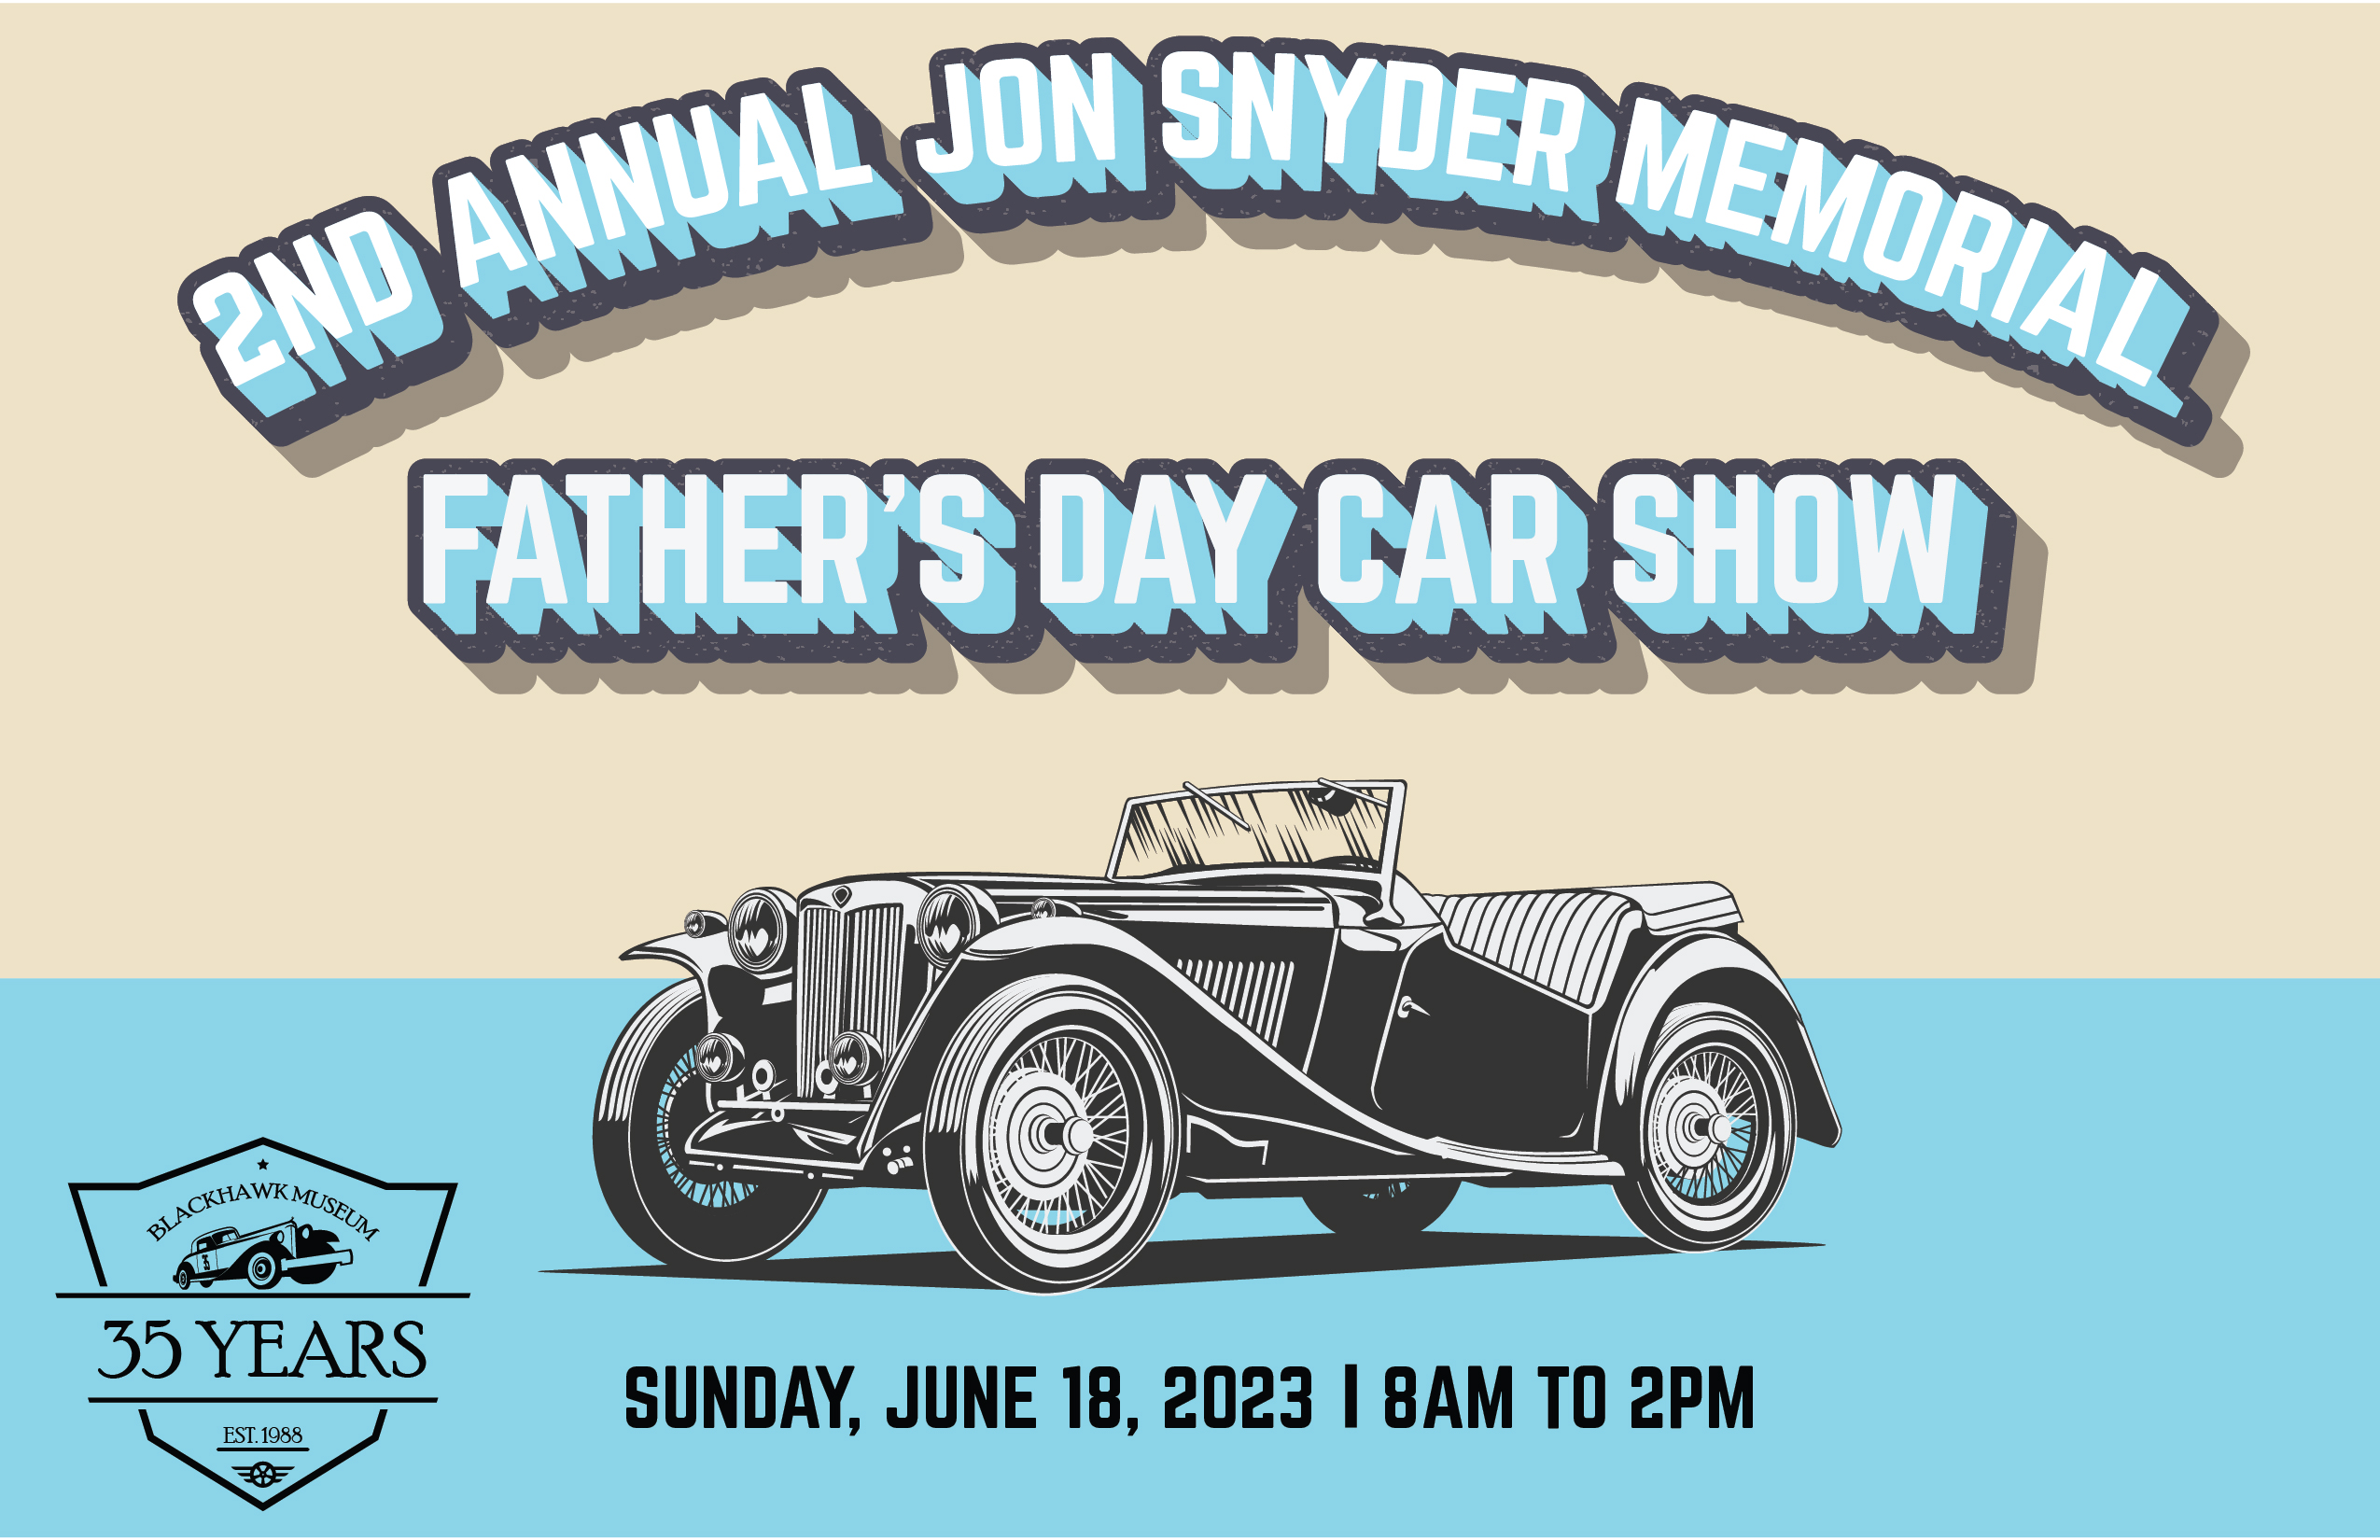 Blackhawk Museum Father's Day Car Show